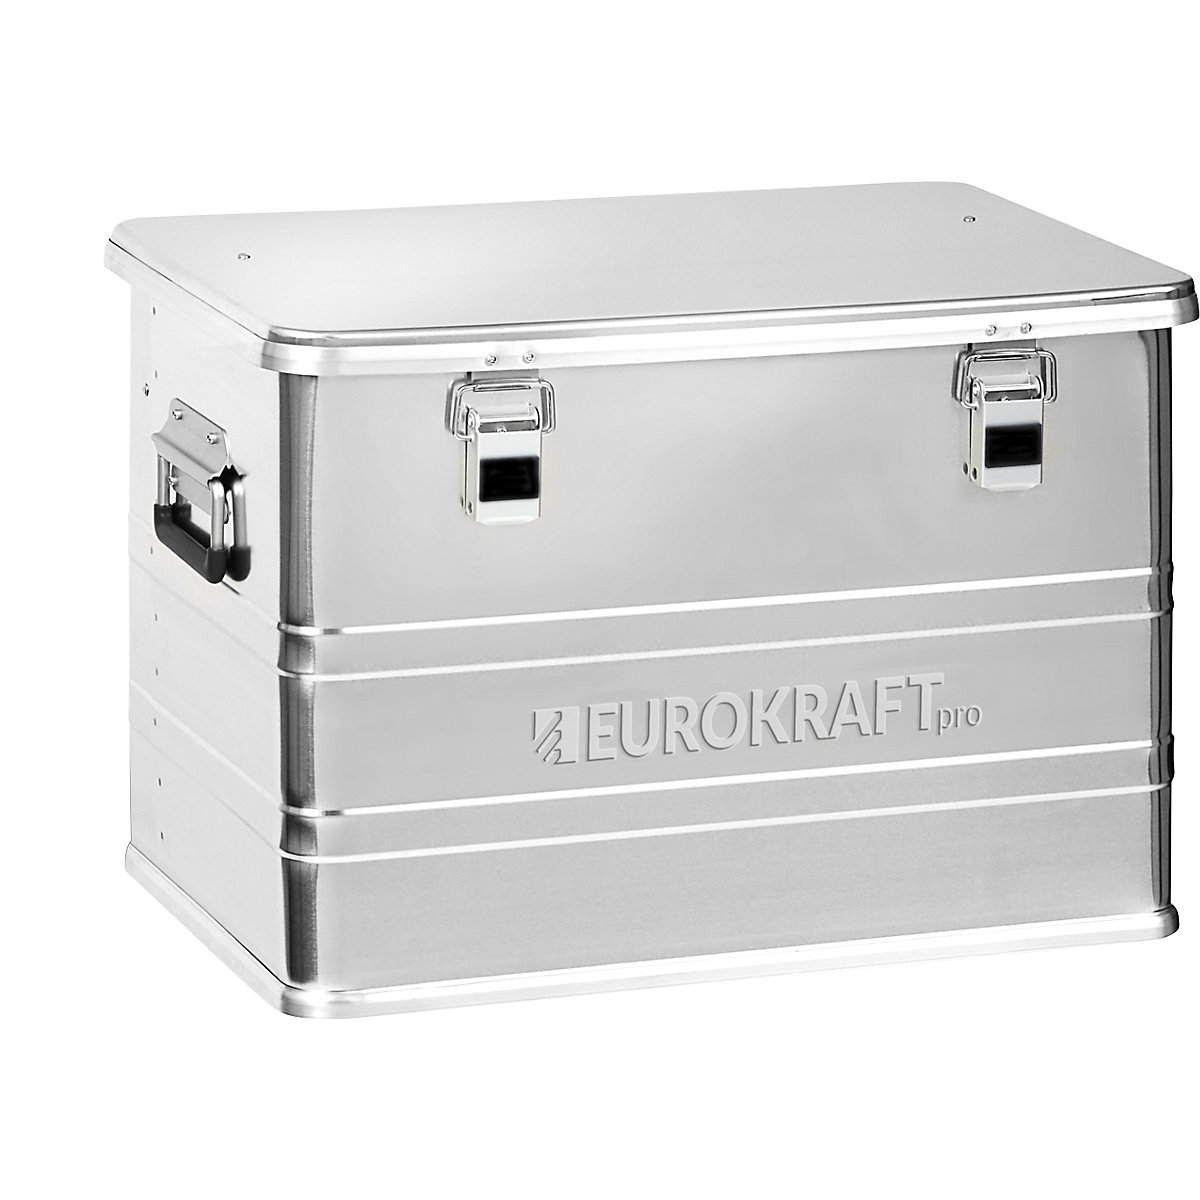 Industry aluminium container – eurokraft pro, capacity 73 l, external LxWxH 580 x 385 x 398 mm-2